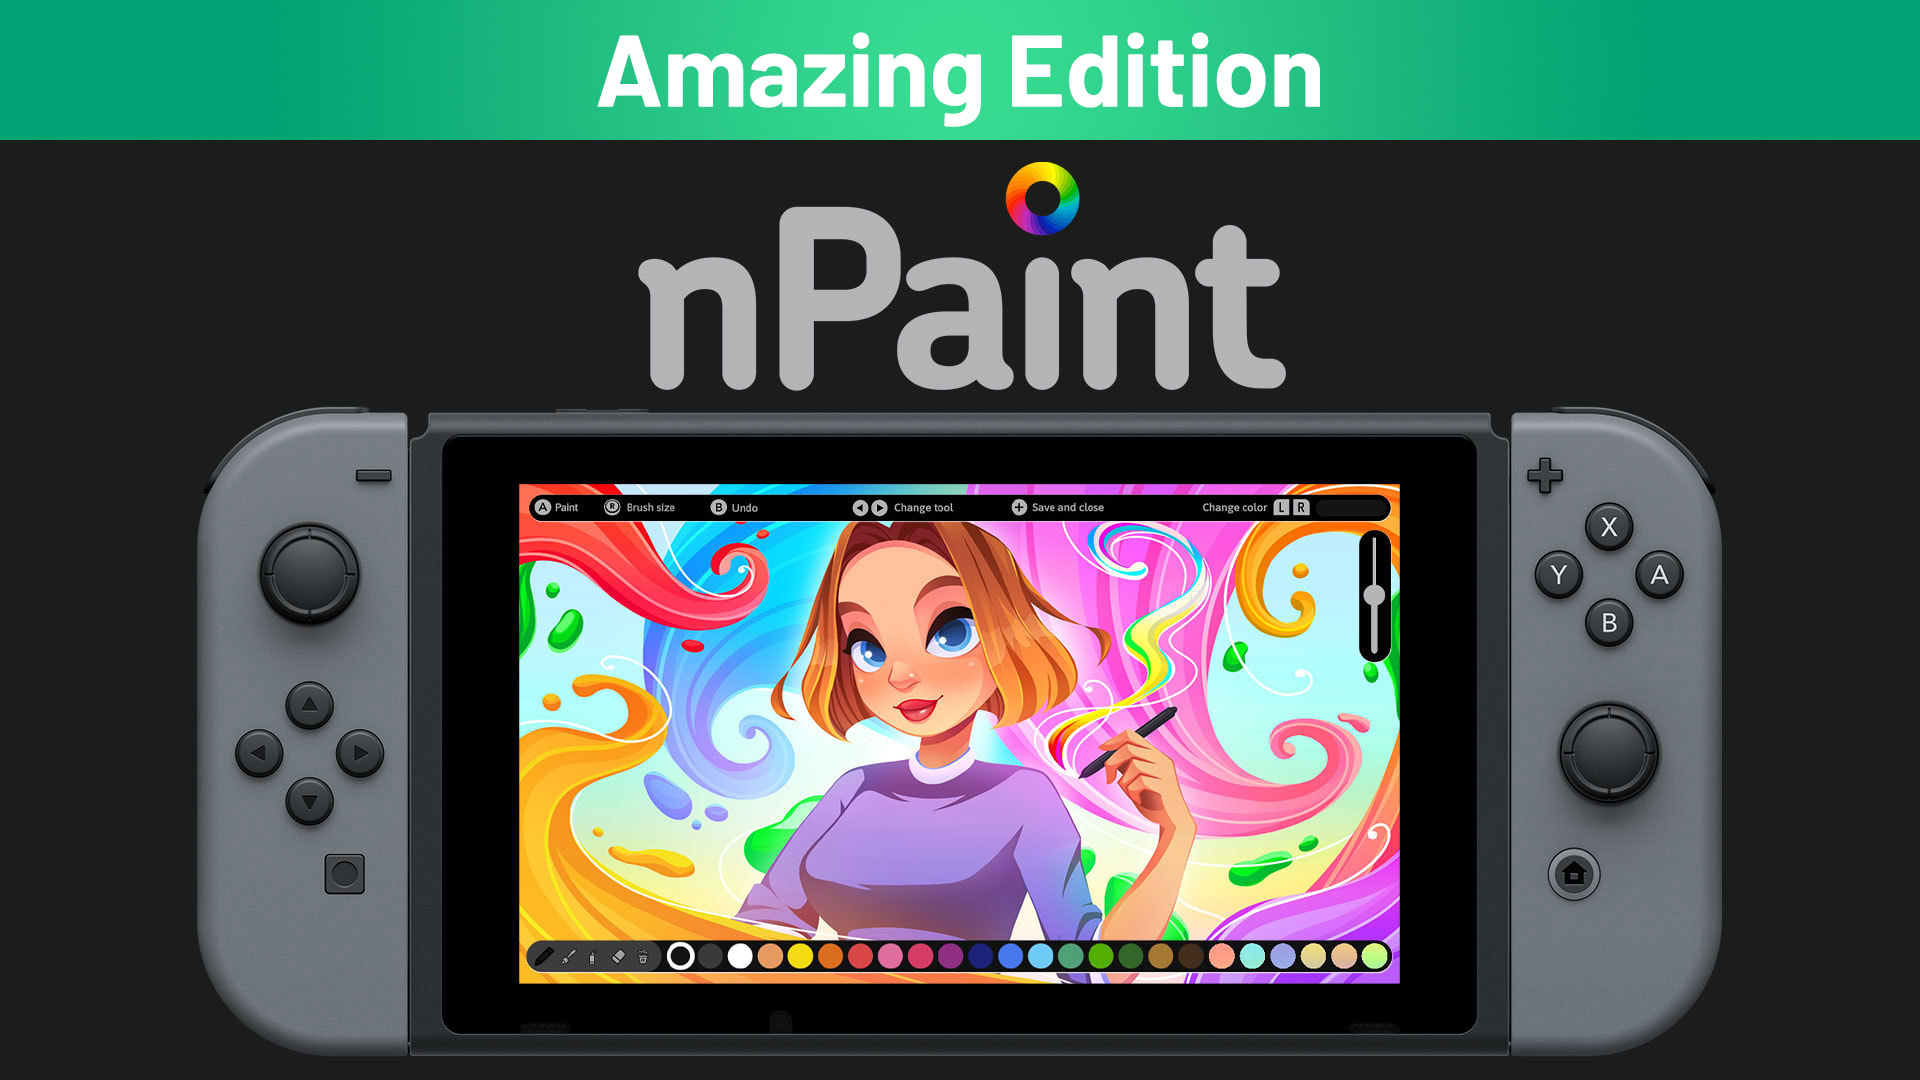 nPaint Amazing Edition